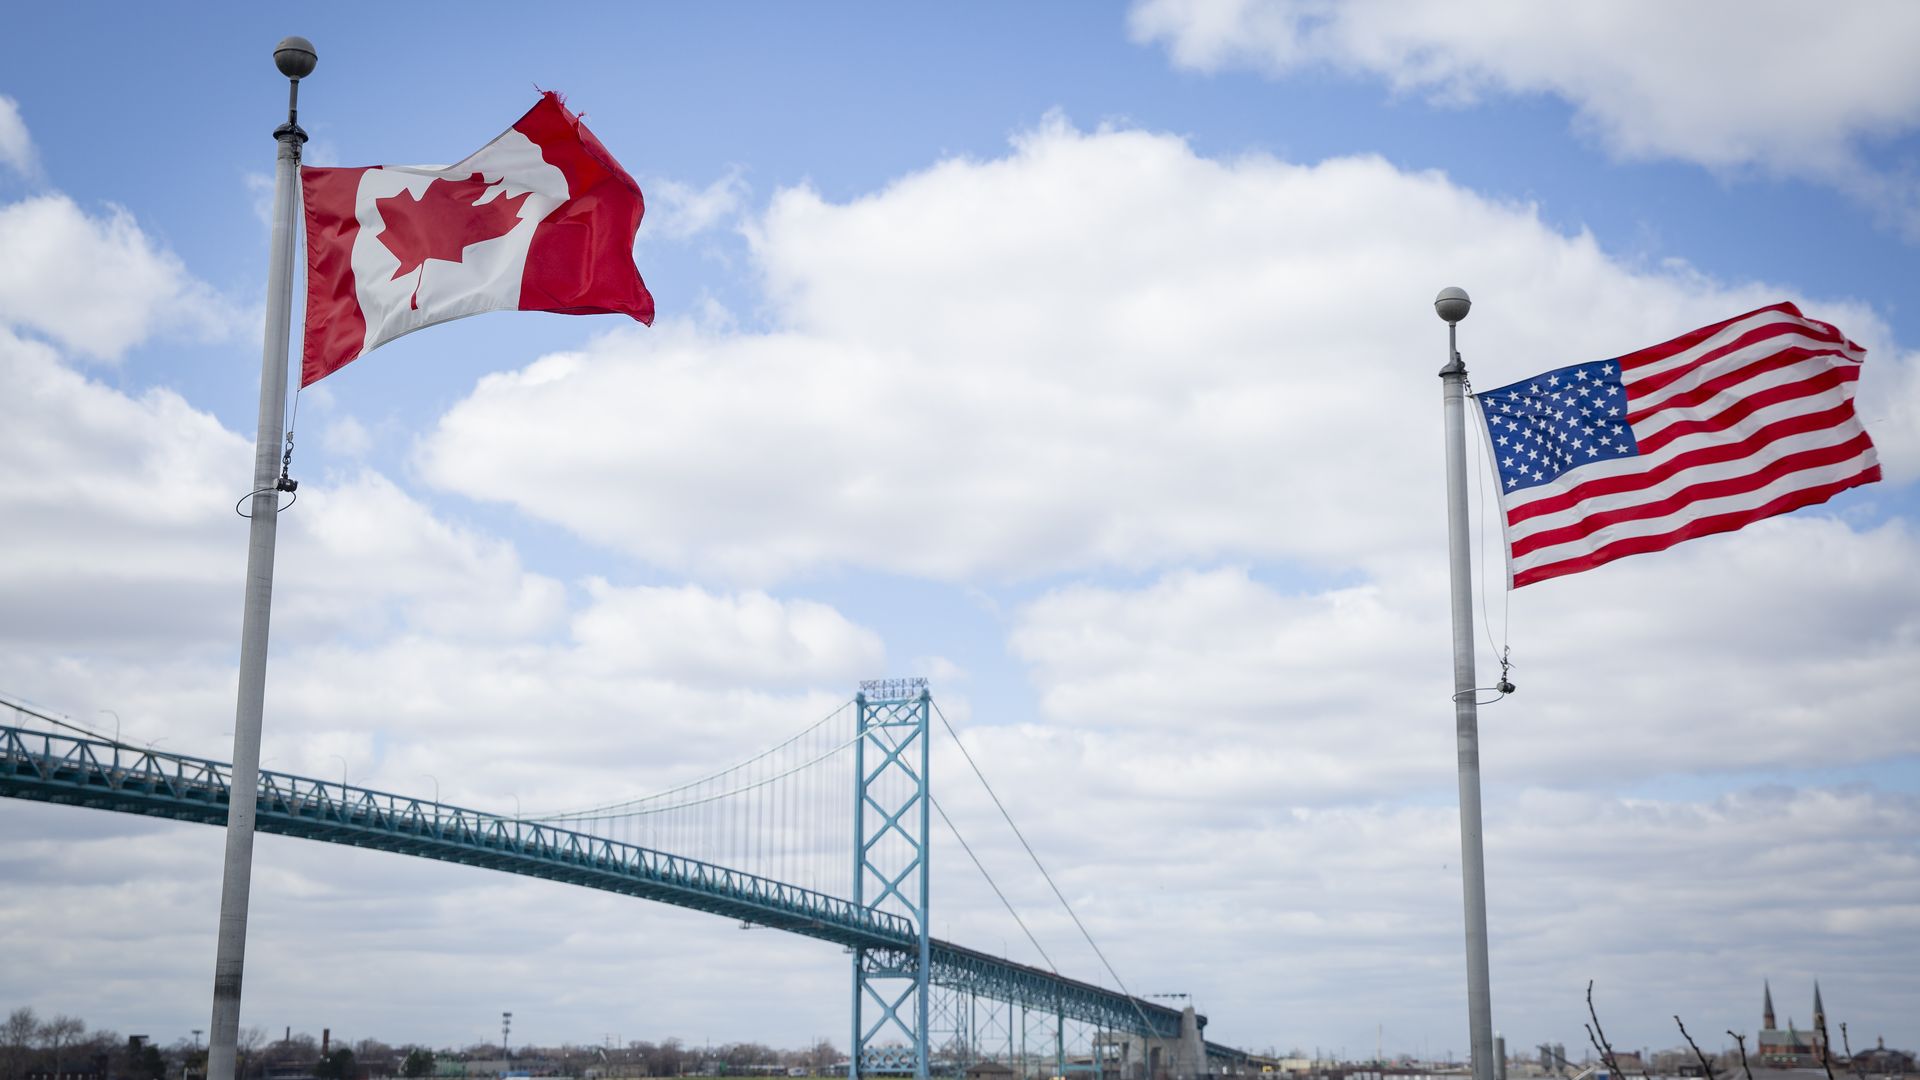 The Ambassador Bridge spans the Detroit River to connect Windsor, Ontario